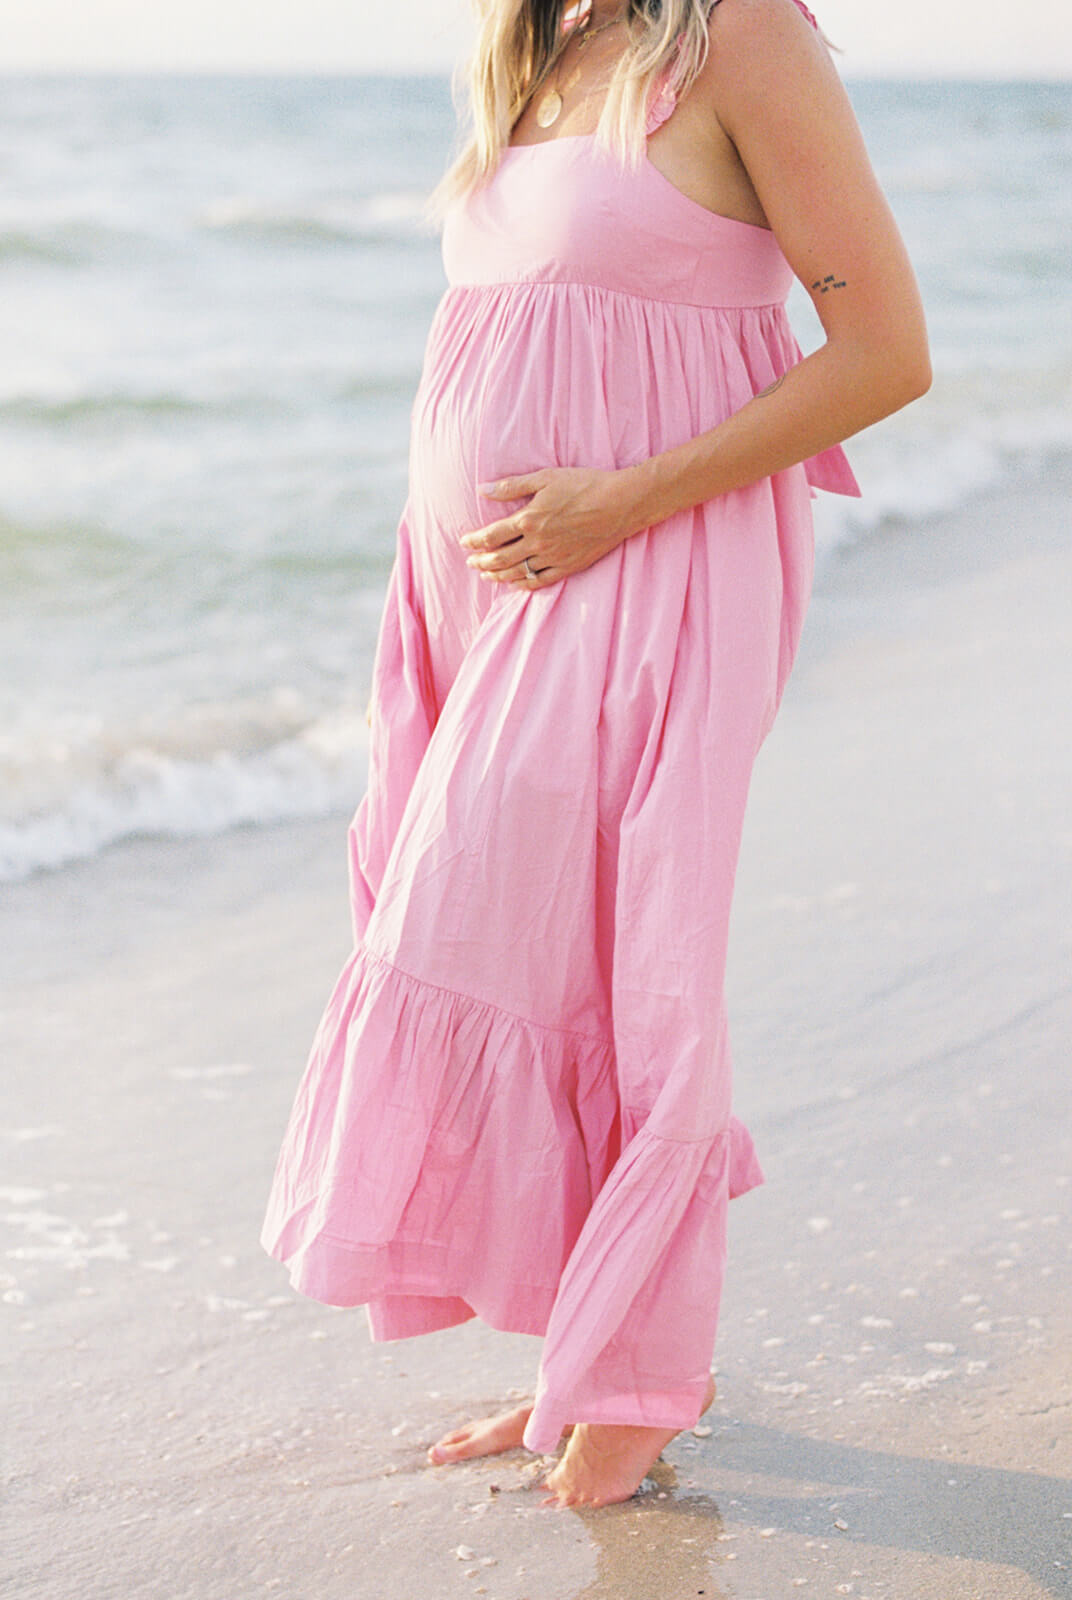 Naples Babymoon Photos | Maternity Photos